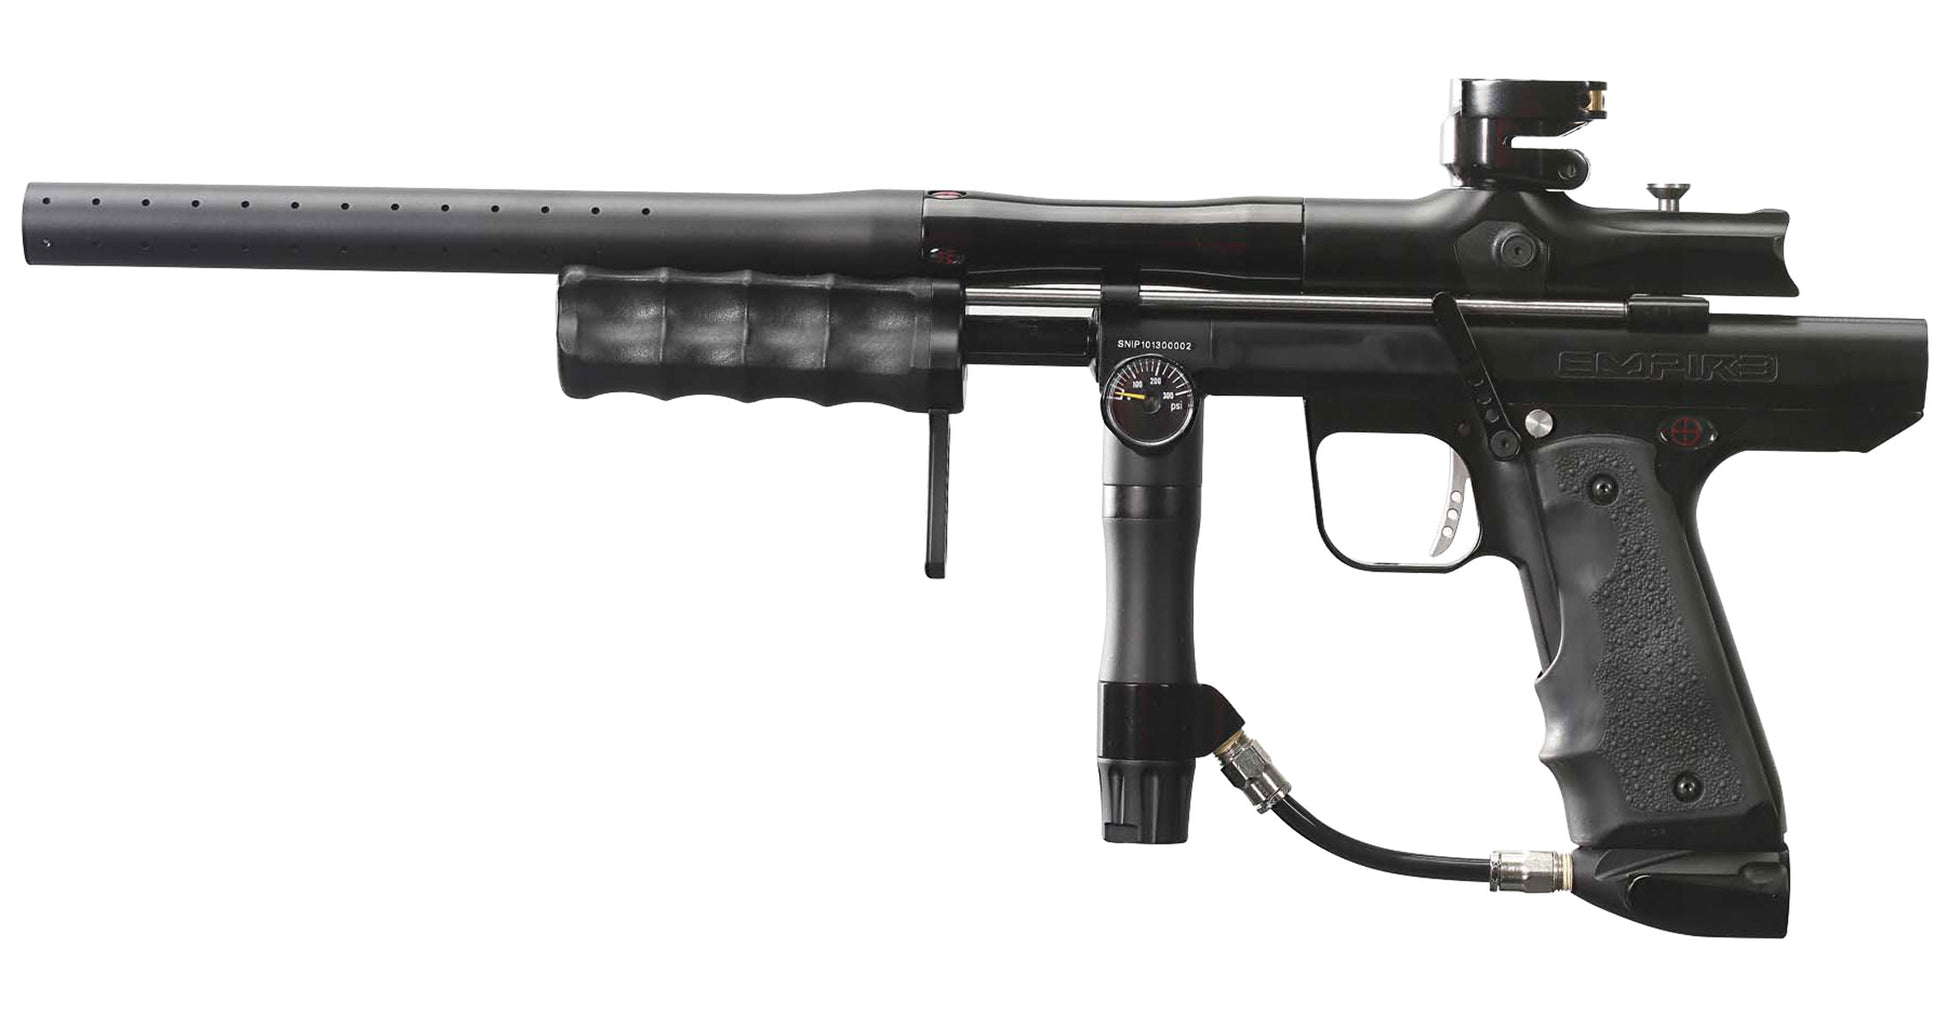 Empire Sniper Pump - Dust Black/Polished Black - Empire